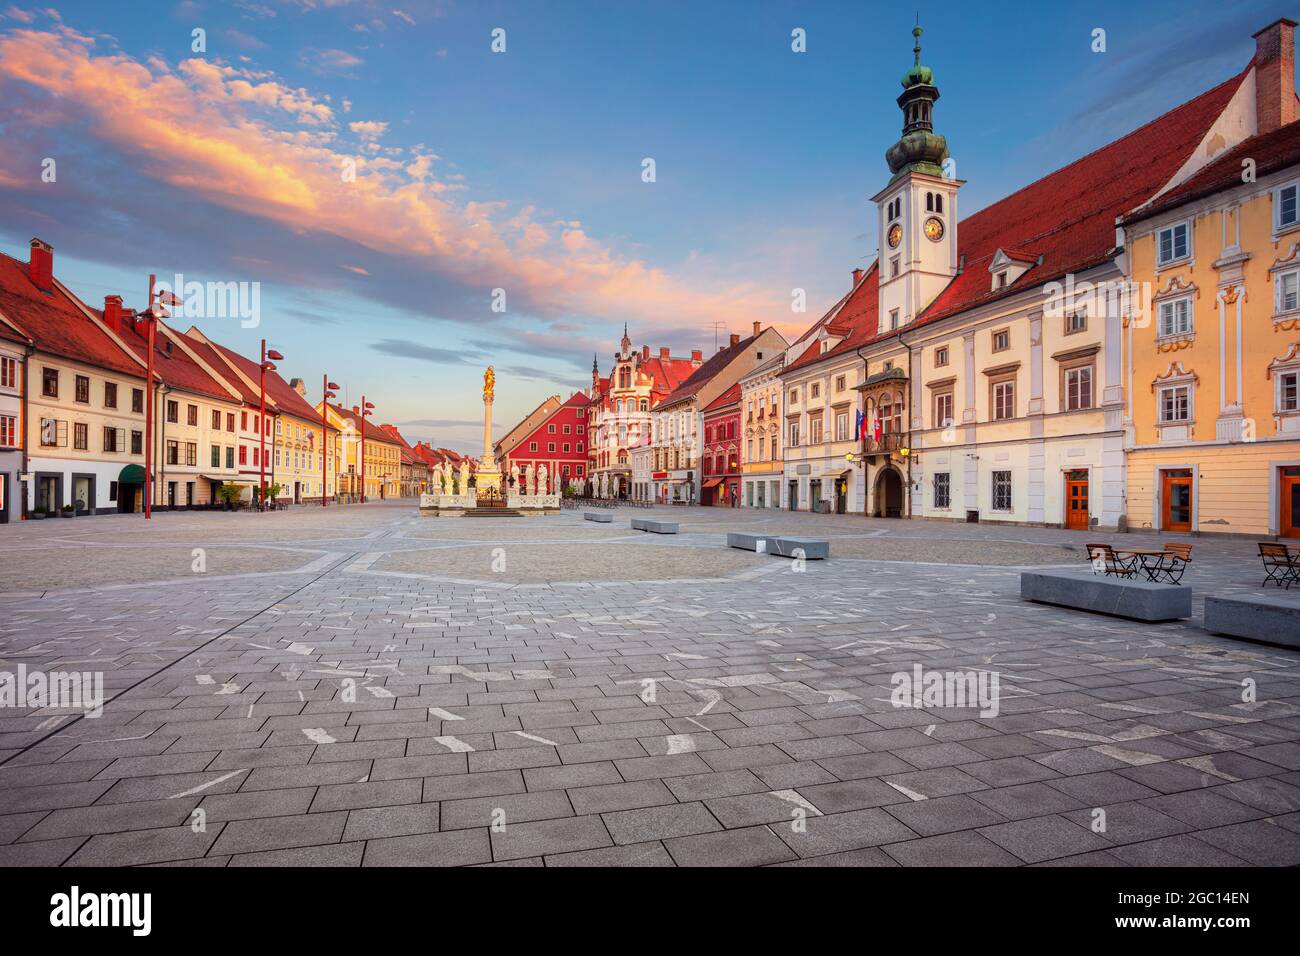 Maribor, Slovenia. Cityscape image of Maribor, Slovenia with the Main Square and the Town Hall at summer sunrise. Stock Photo